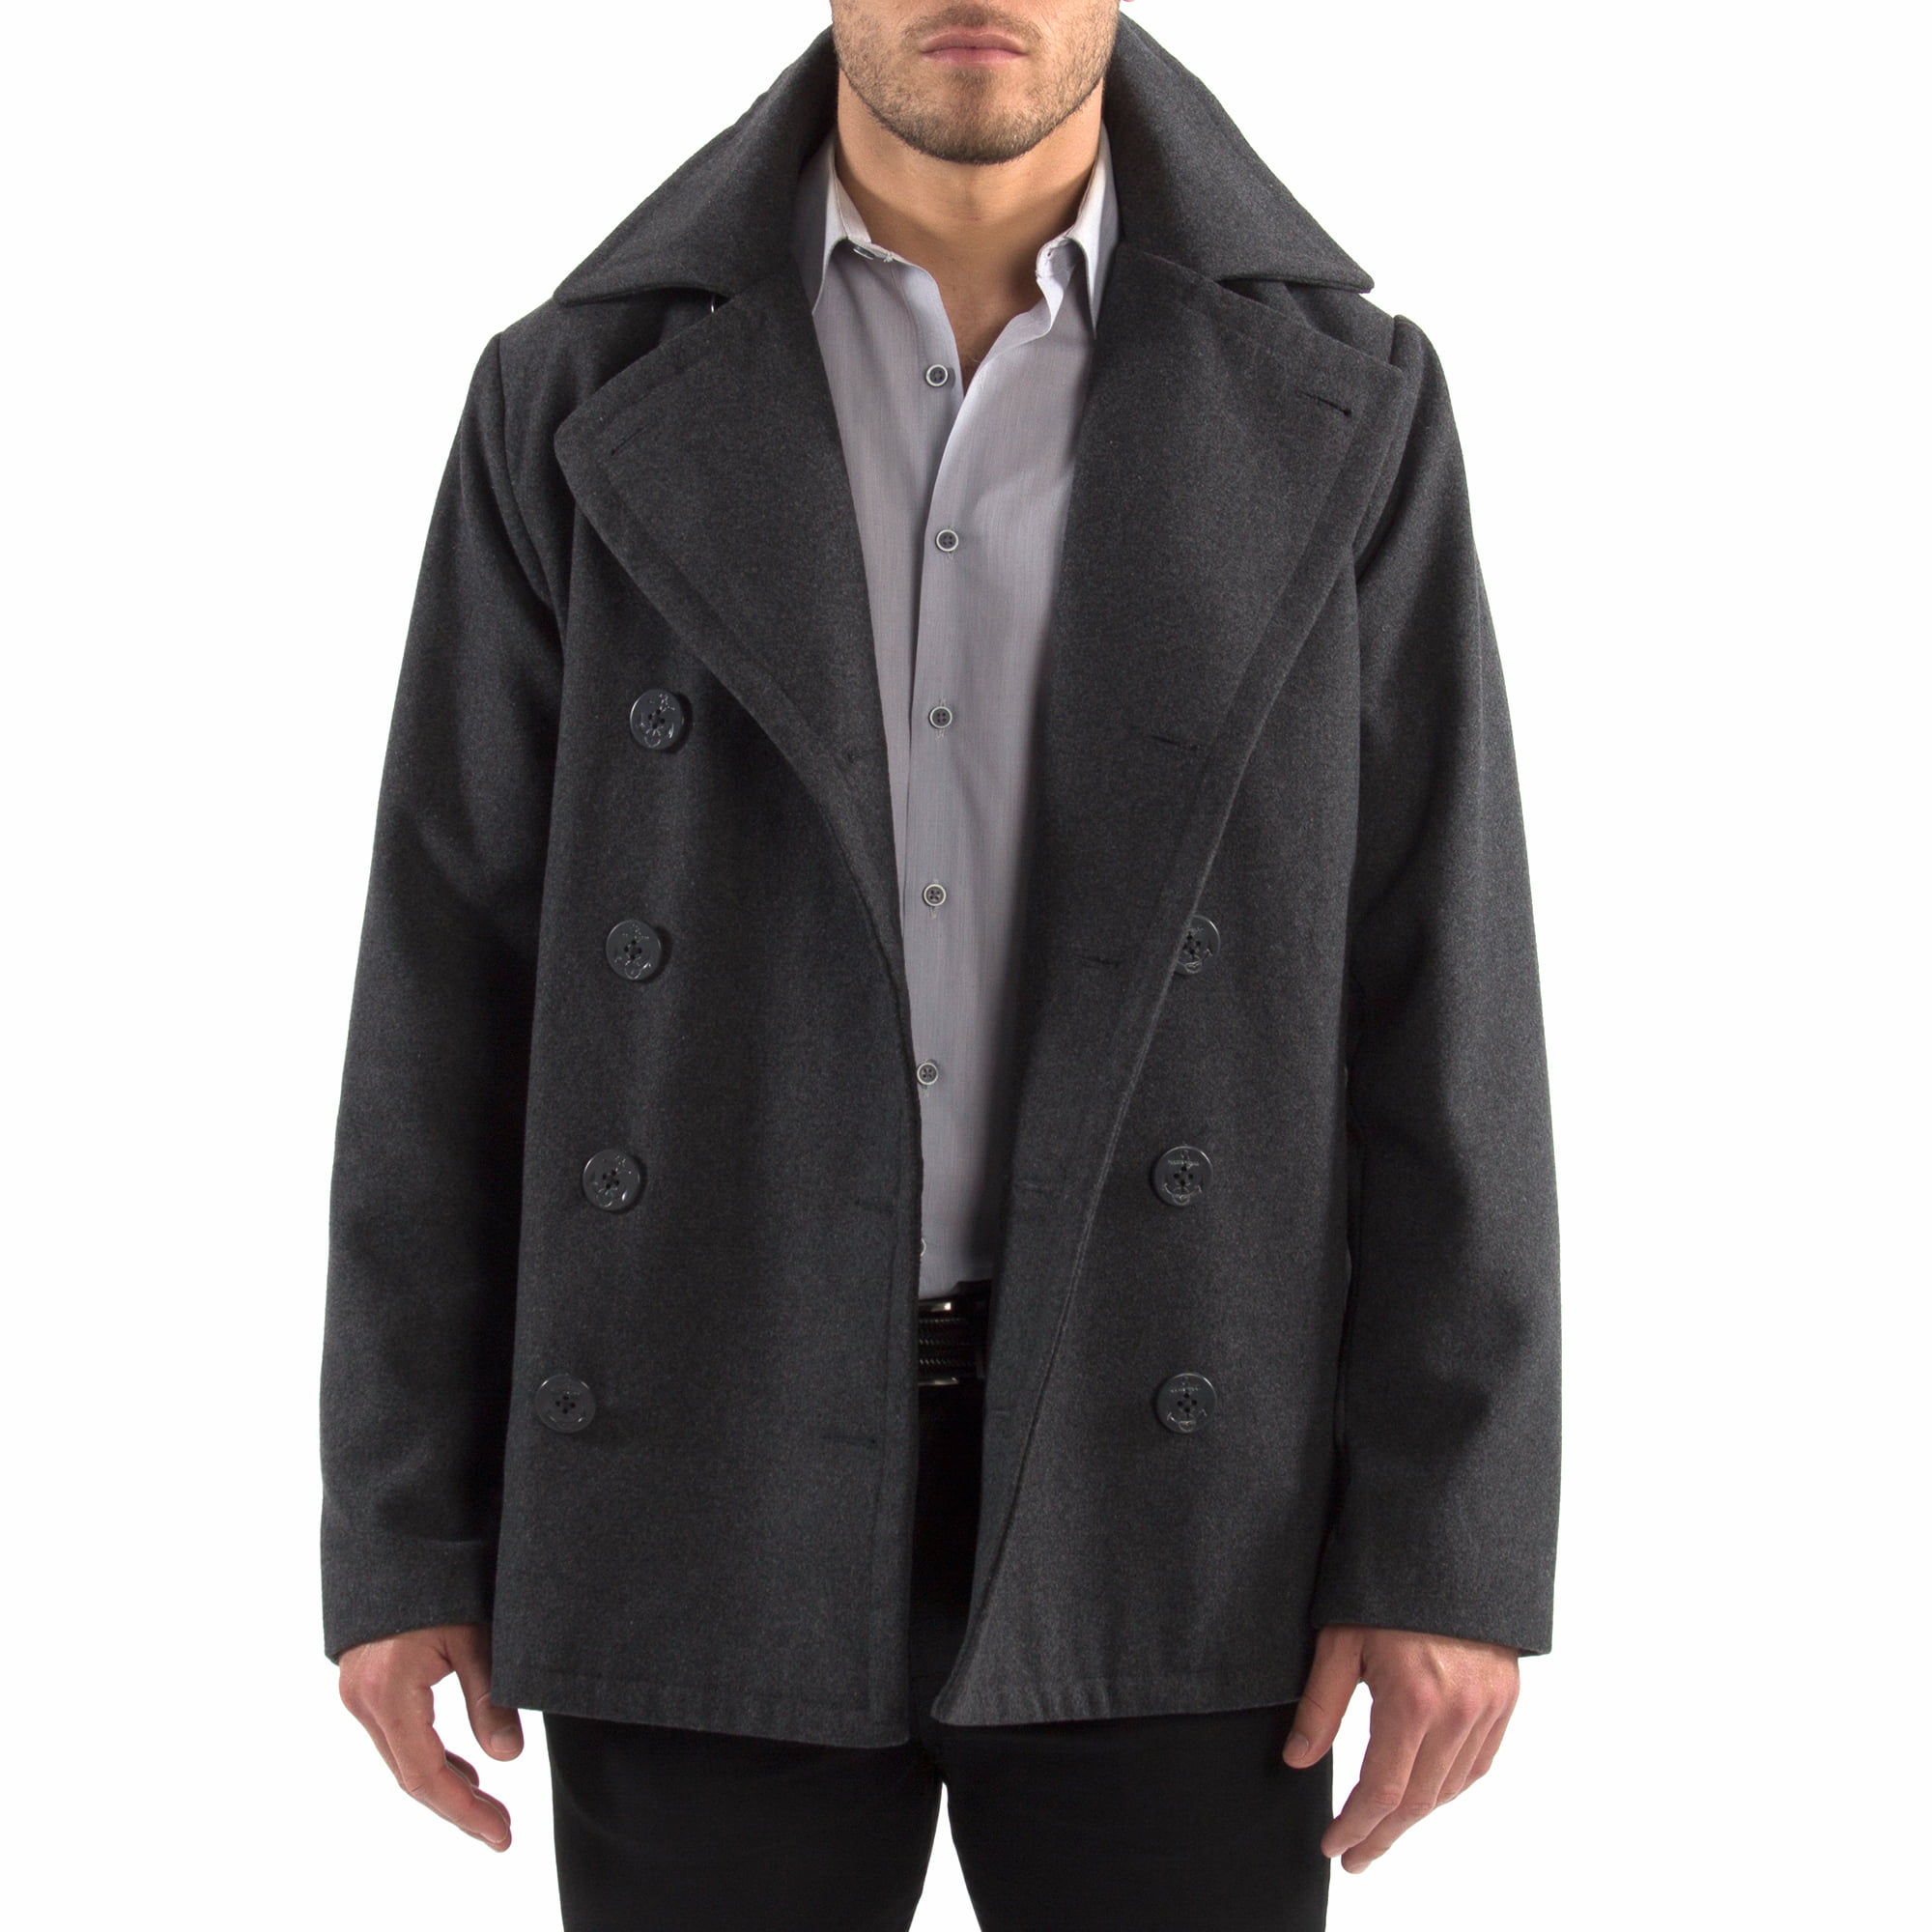 Men's Pea Coat Winter Warm Lapel Double-Breasteed Overcoat Long Jacket  Fashion